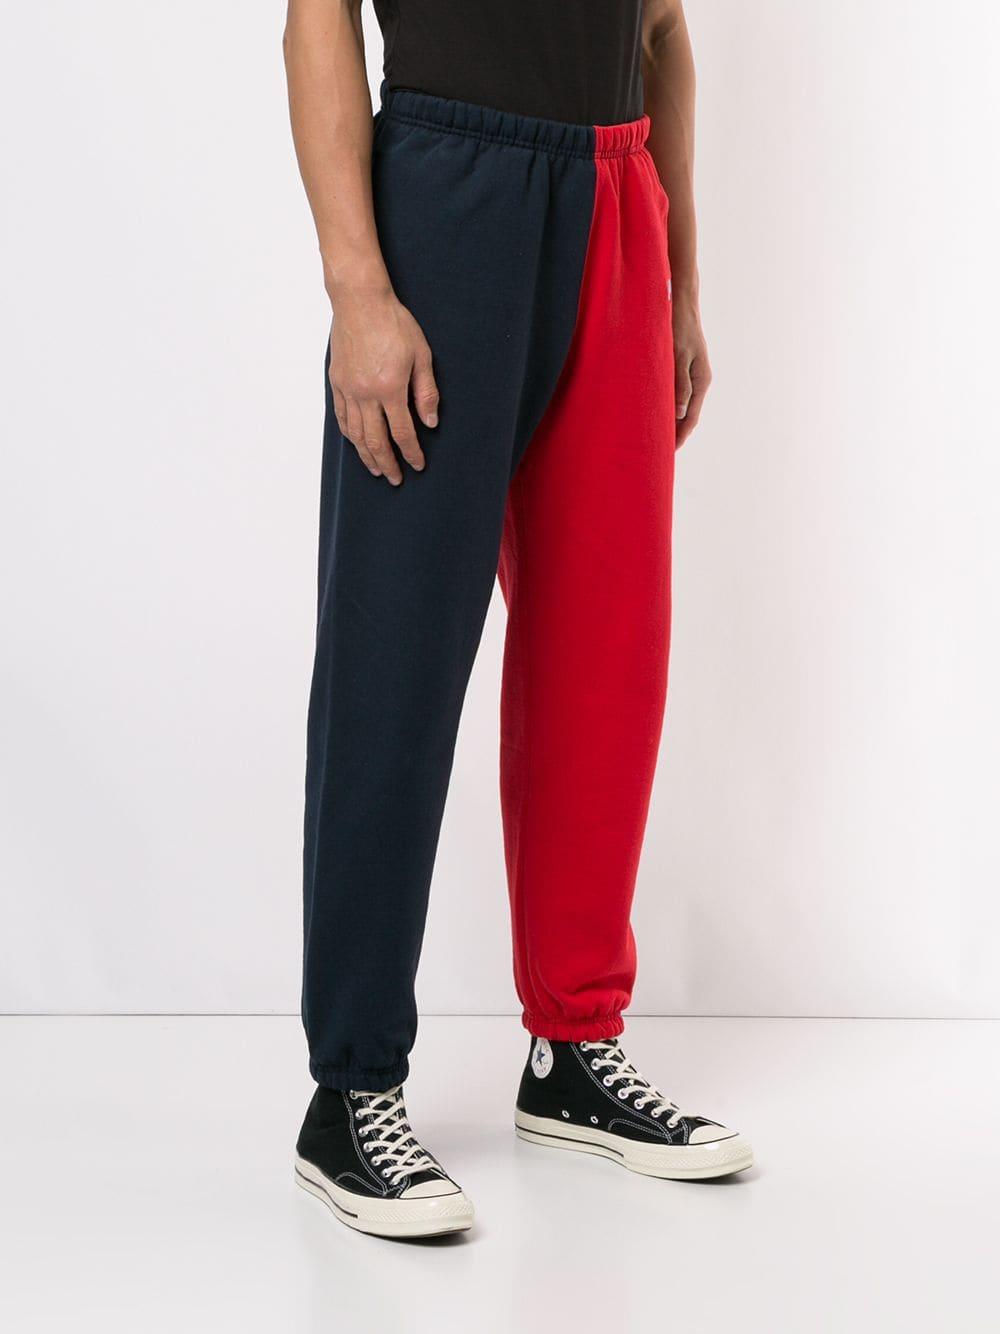 Supreme Cotton Split Bi-colour Track Pants in Red for Men - Lyst